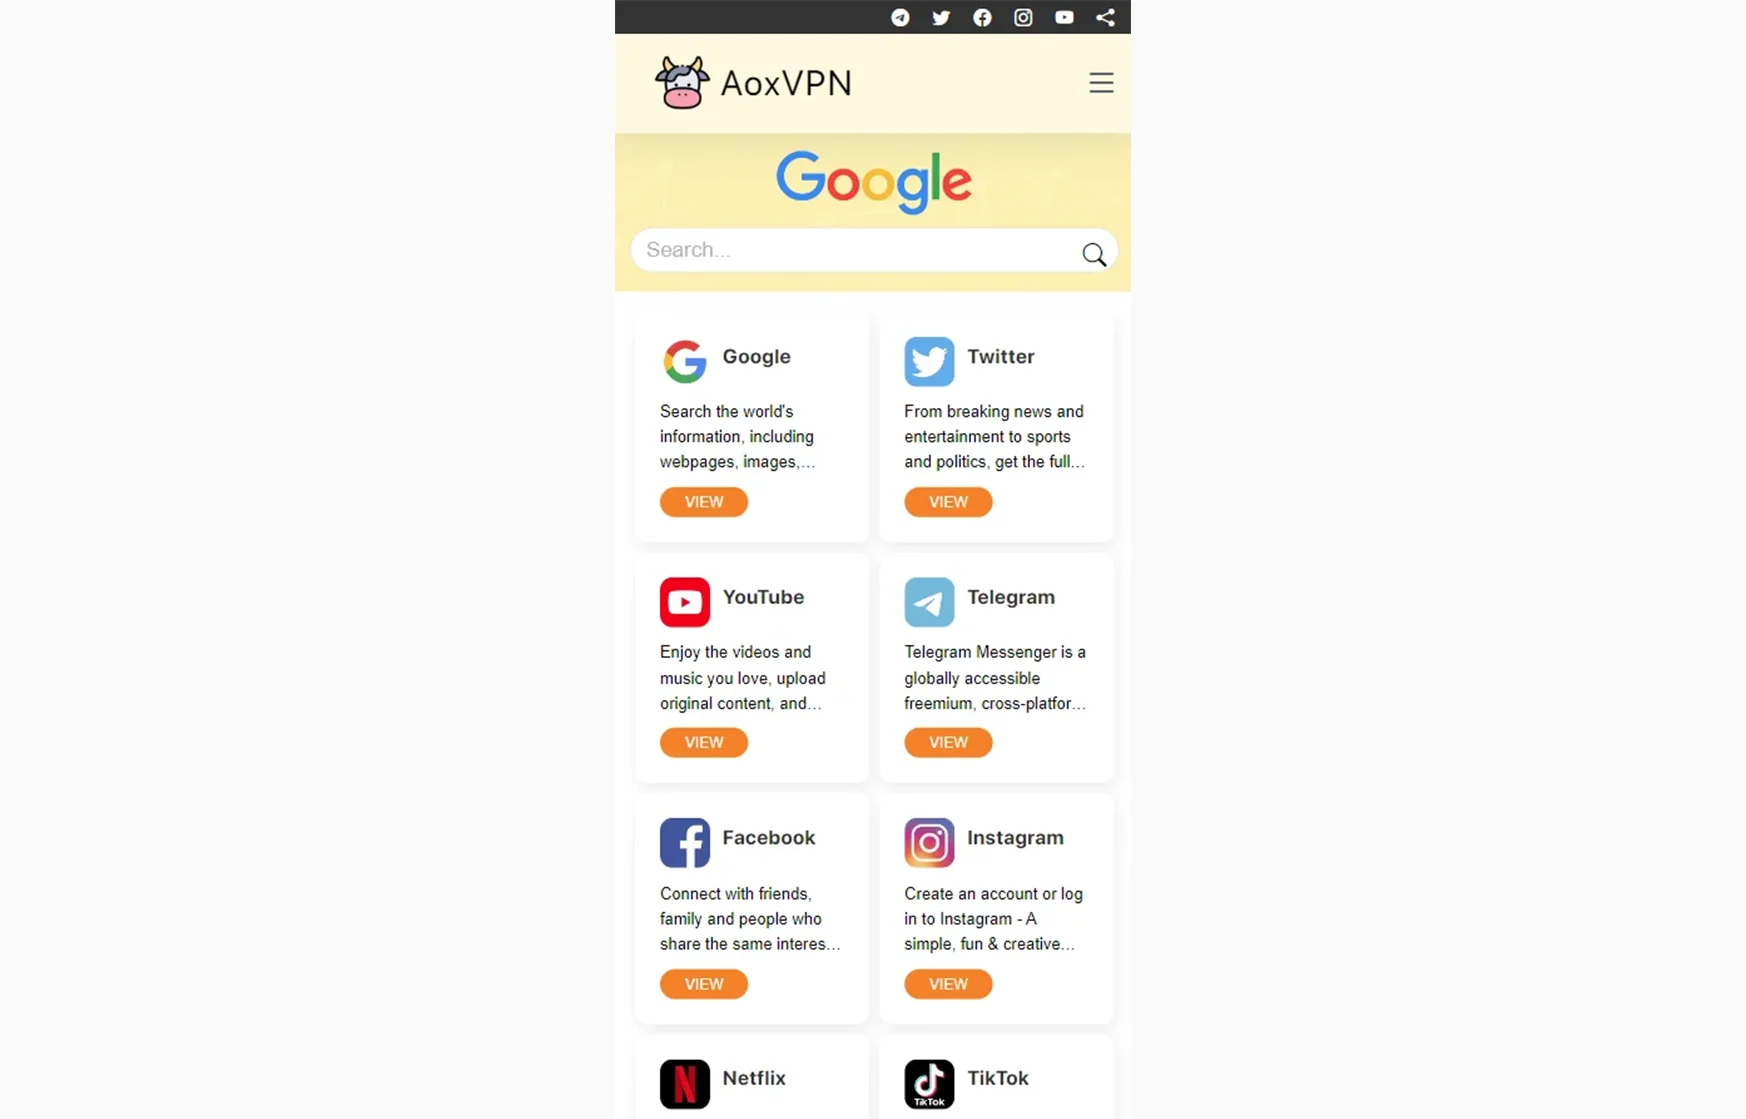 AoxVPN Free Download | For Windows, macOS, iOS & Android-AoxVPN, VPN Service, Free VPN Download, China VPN, Anonymous VPN, iOS VPN, Windows VPN, Android VPN, Mac VPN, Best VPN 2023